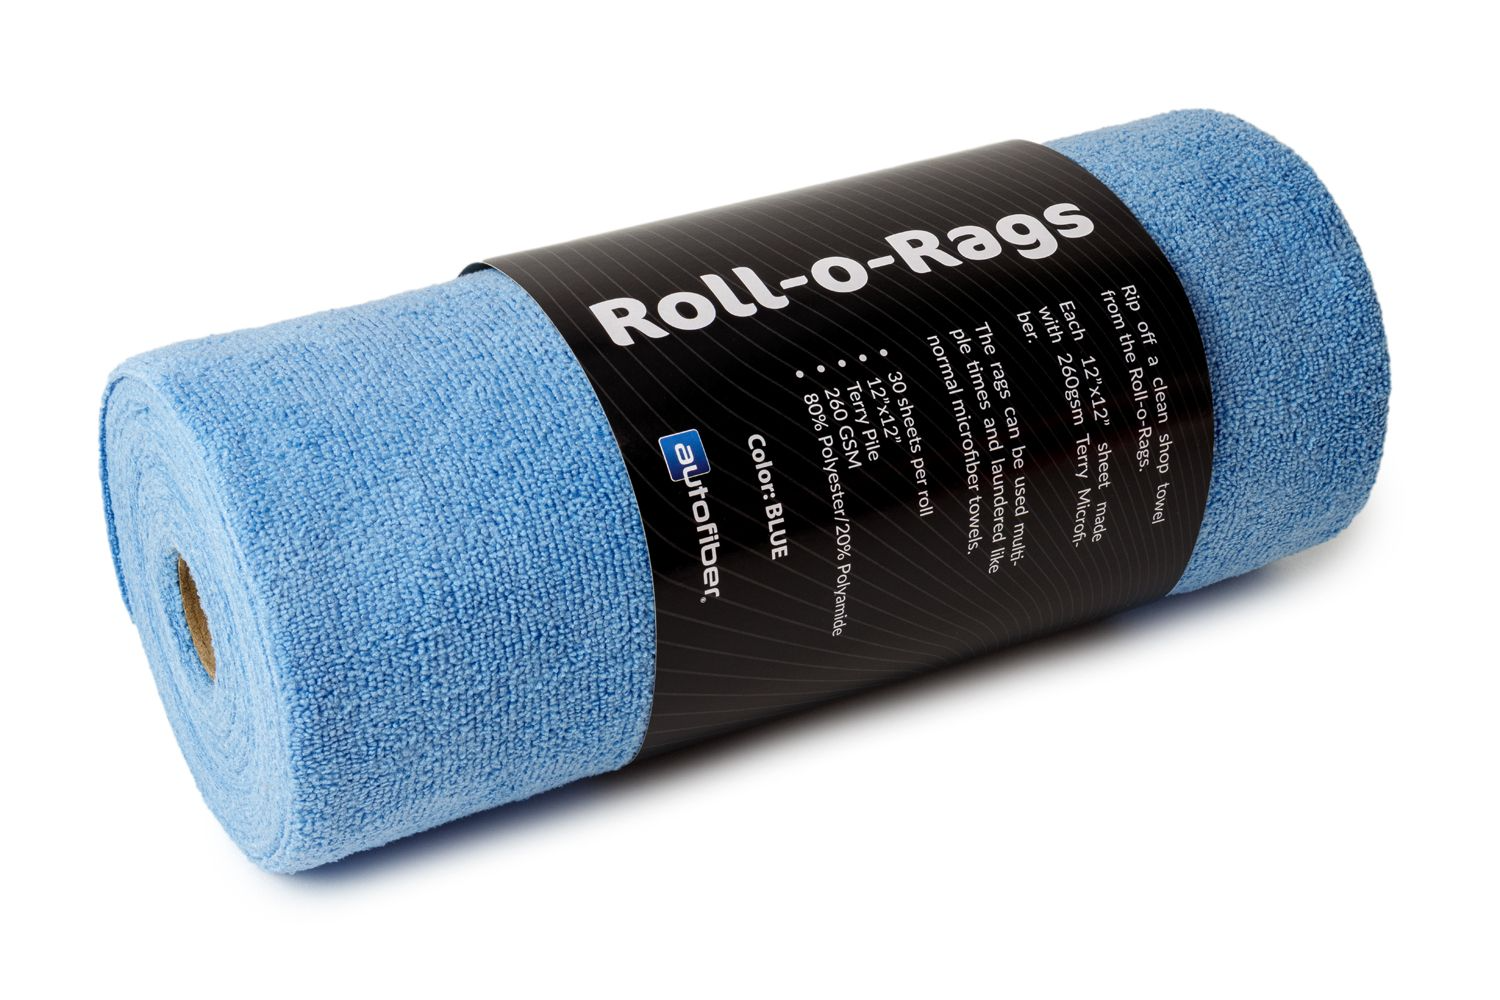 Autofiber [Roll-o-Rags] Microfiber Towels on a Roll 12"x12" - 30/roll